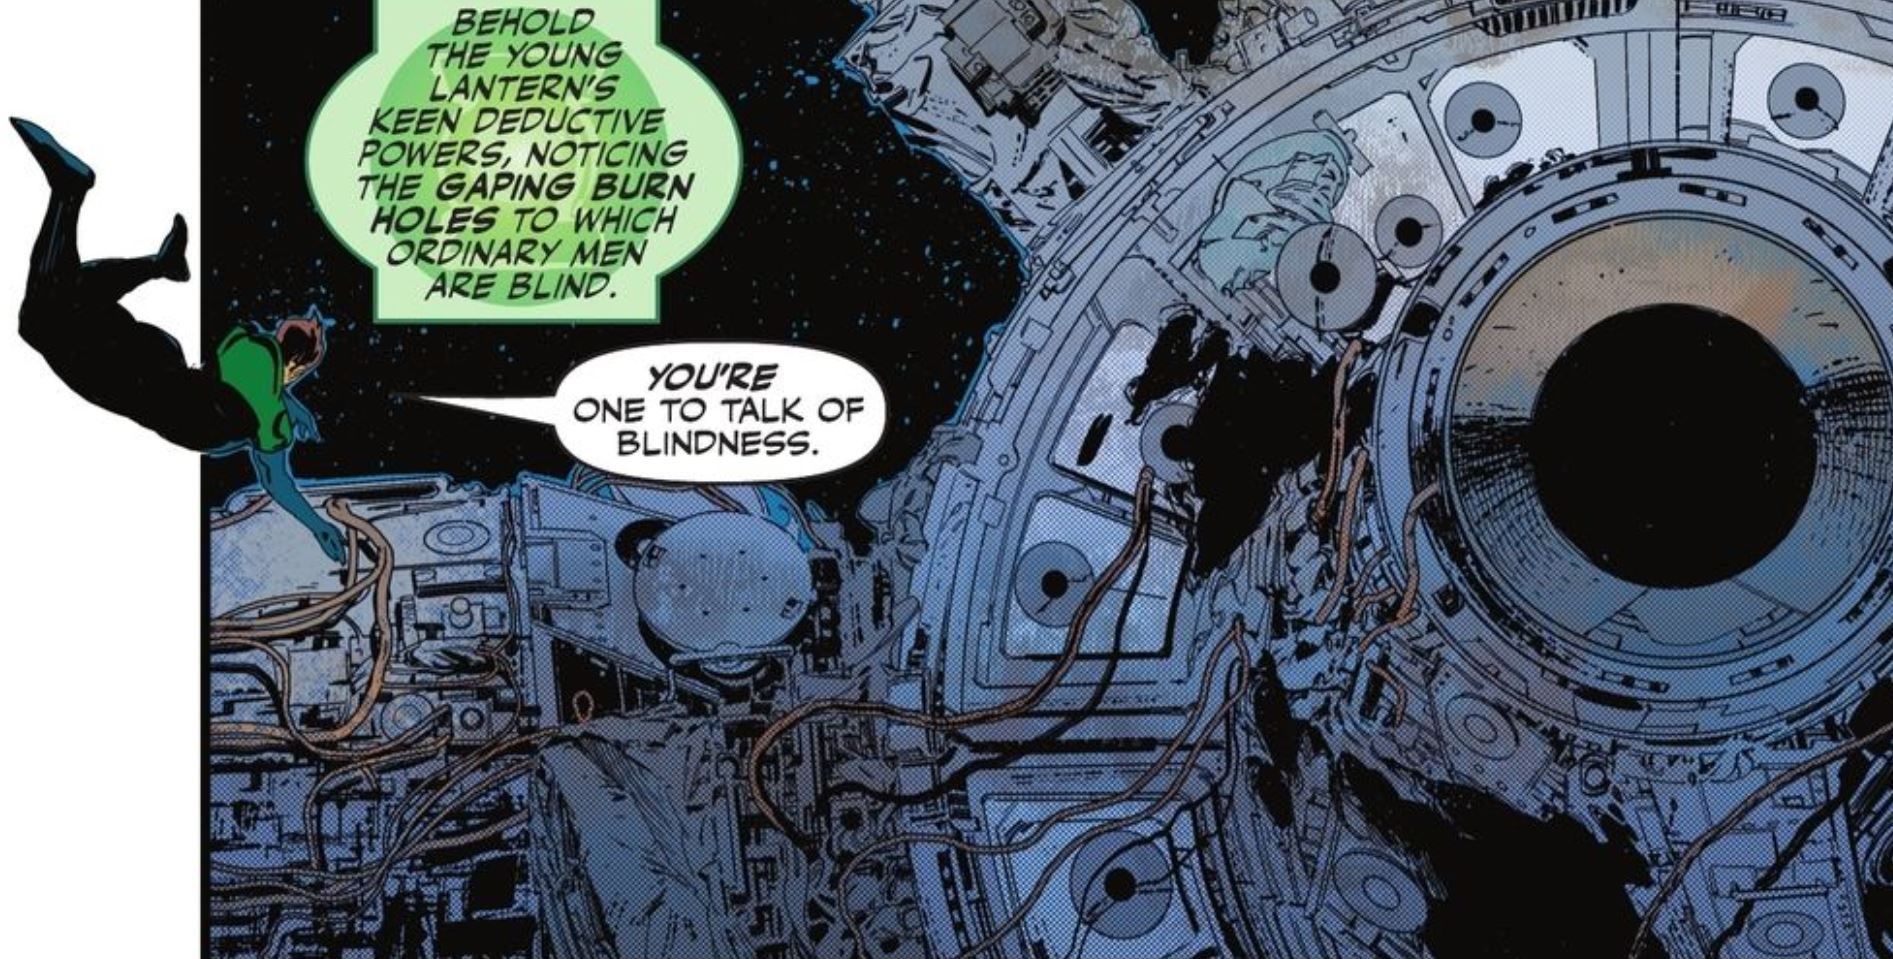 Green Lantern Shepherd Talks with Ring DC